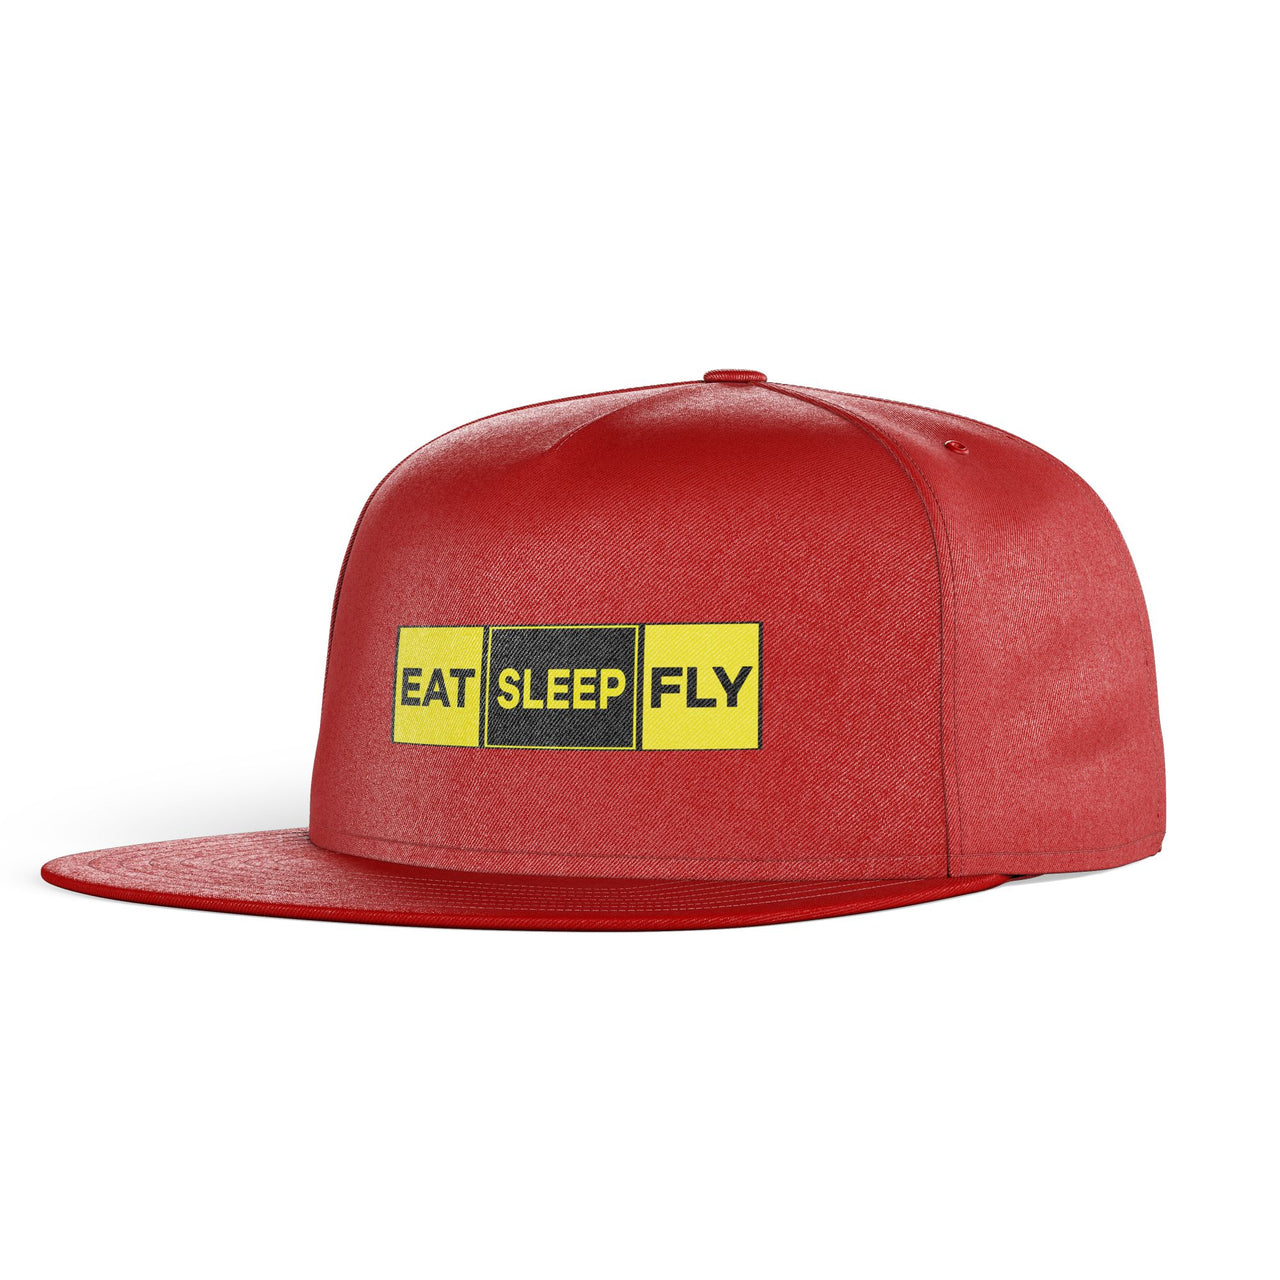 Eat Sleep Fly (Colourful) Designed Snapback Caps & Hats